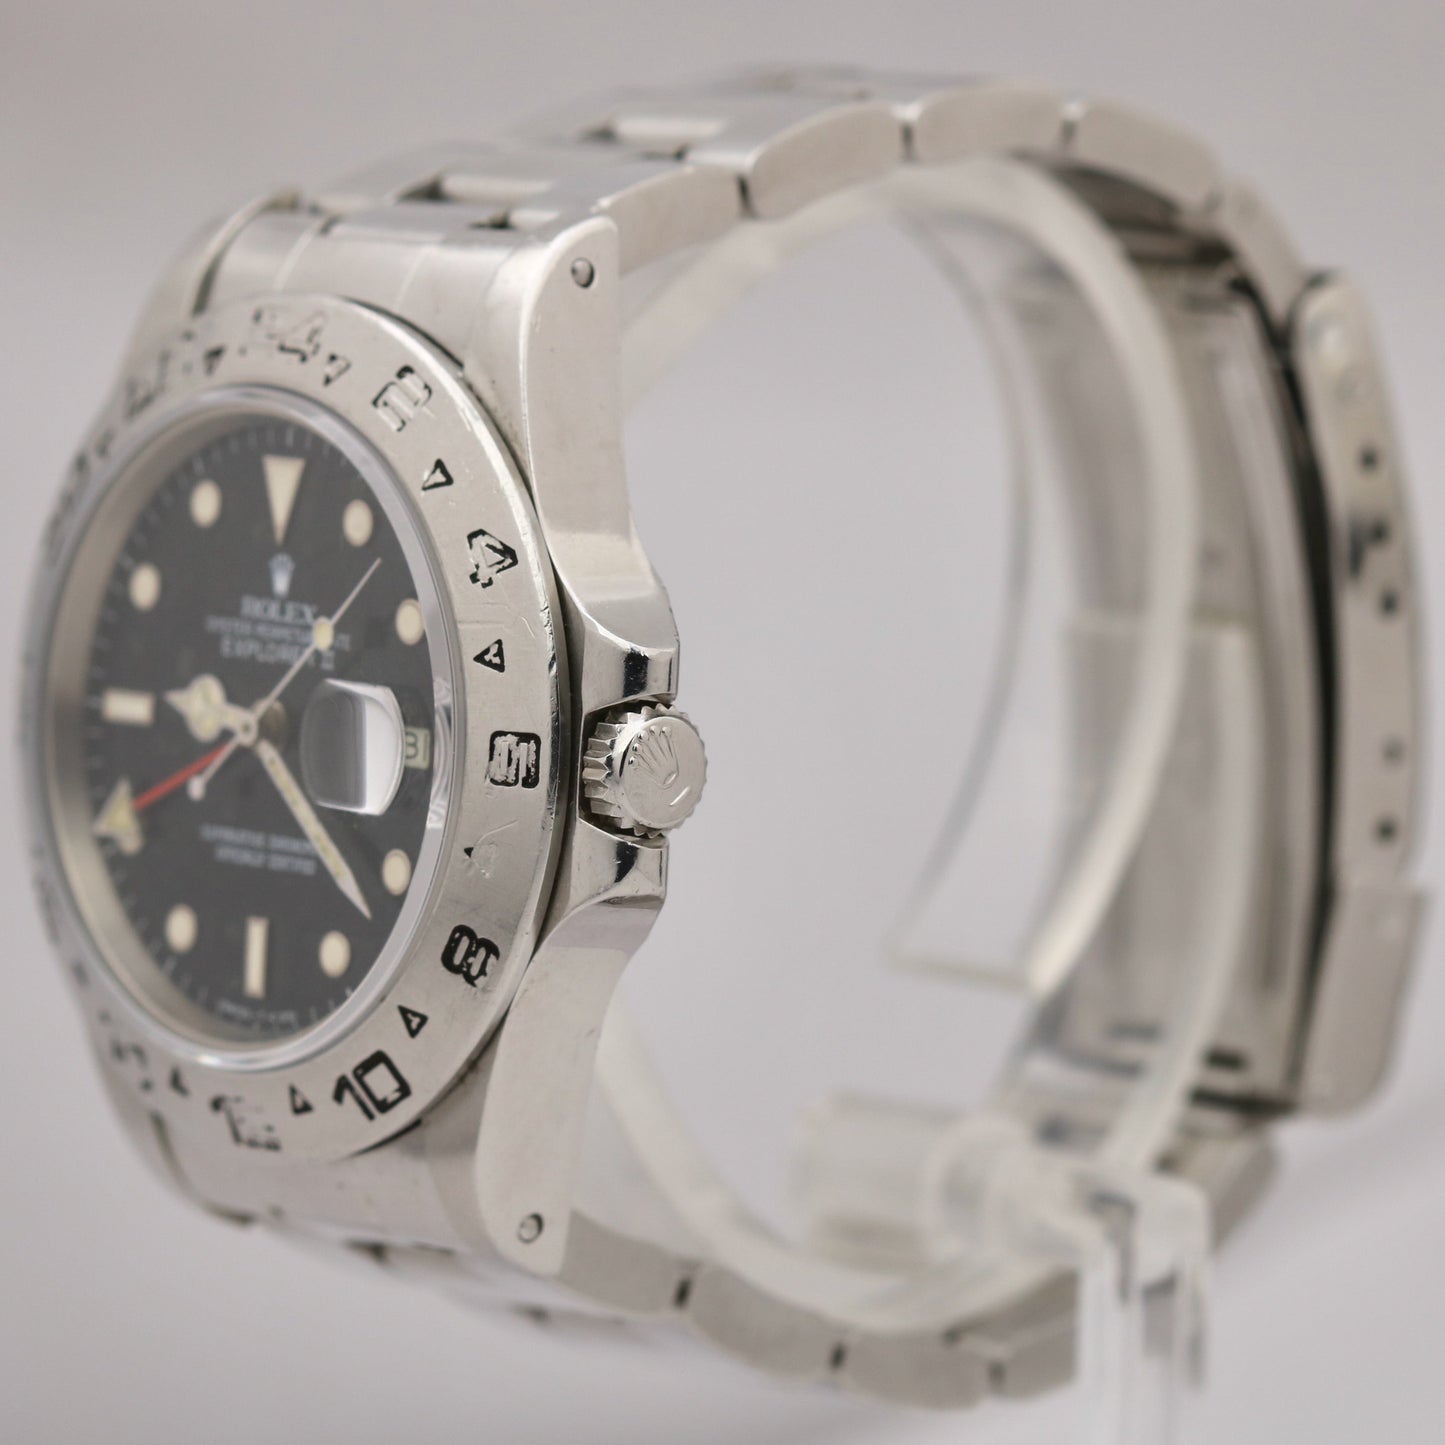 Rolex Explorer II Black SPIDER DIAL Patina Stainless Steel 40mm Watch 16550